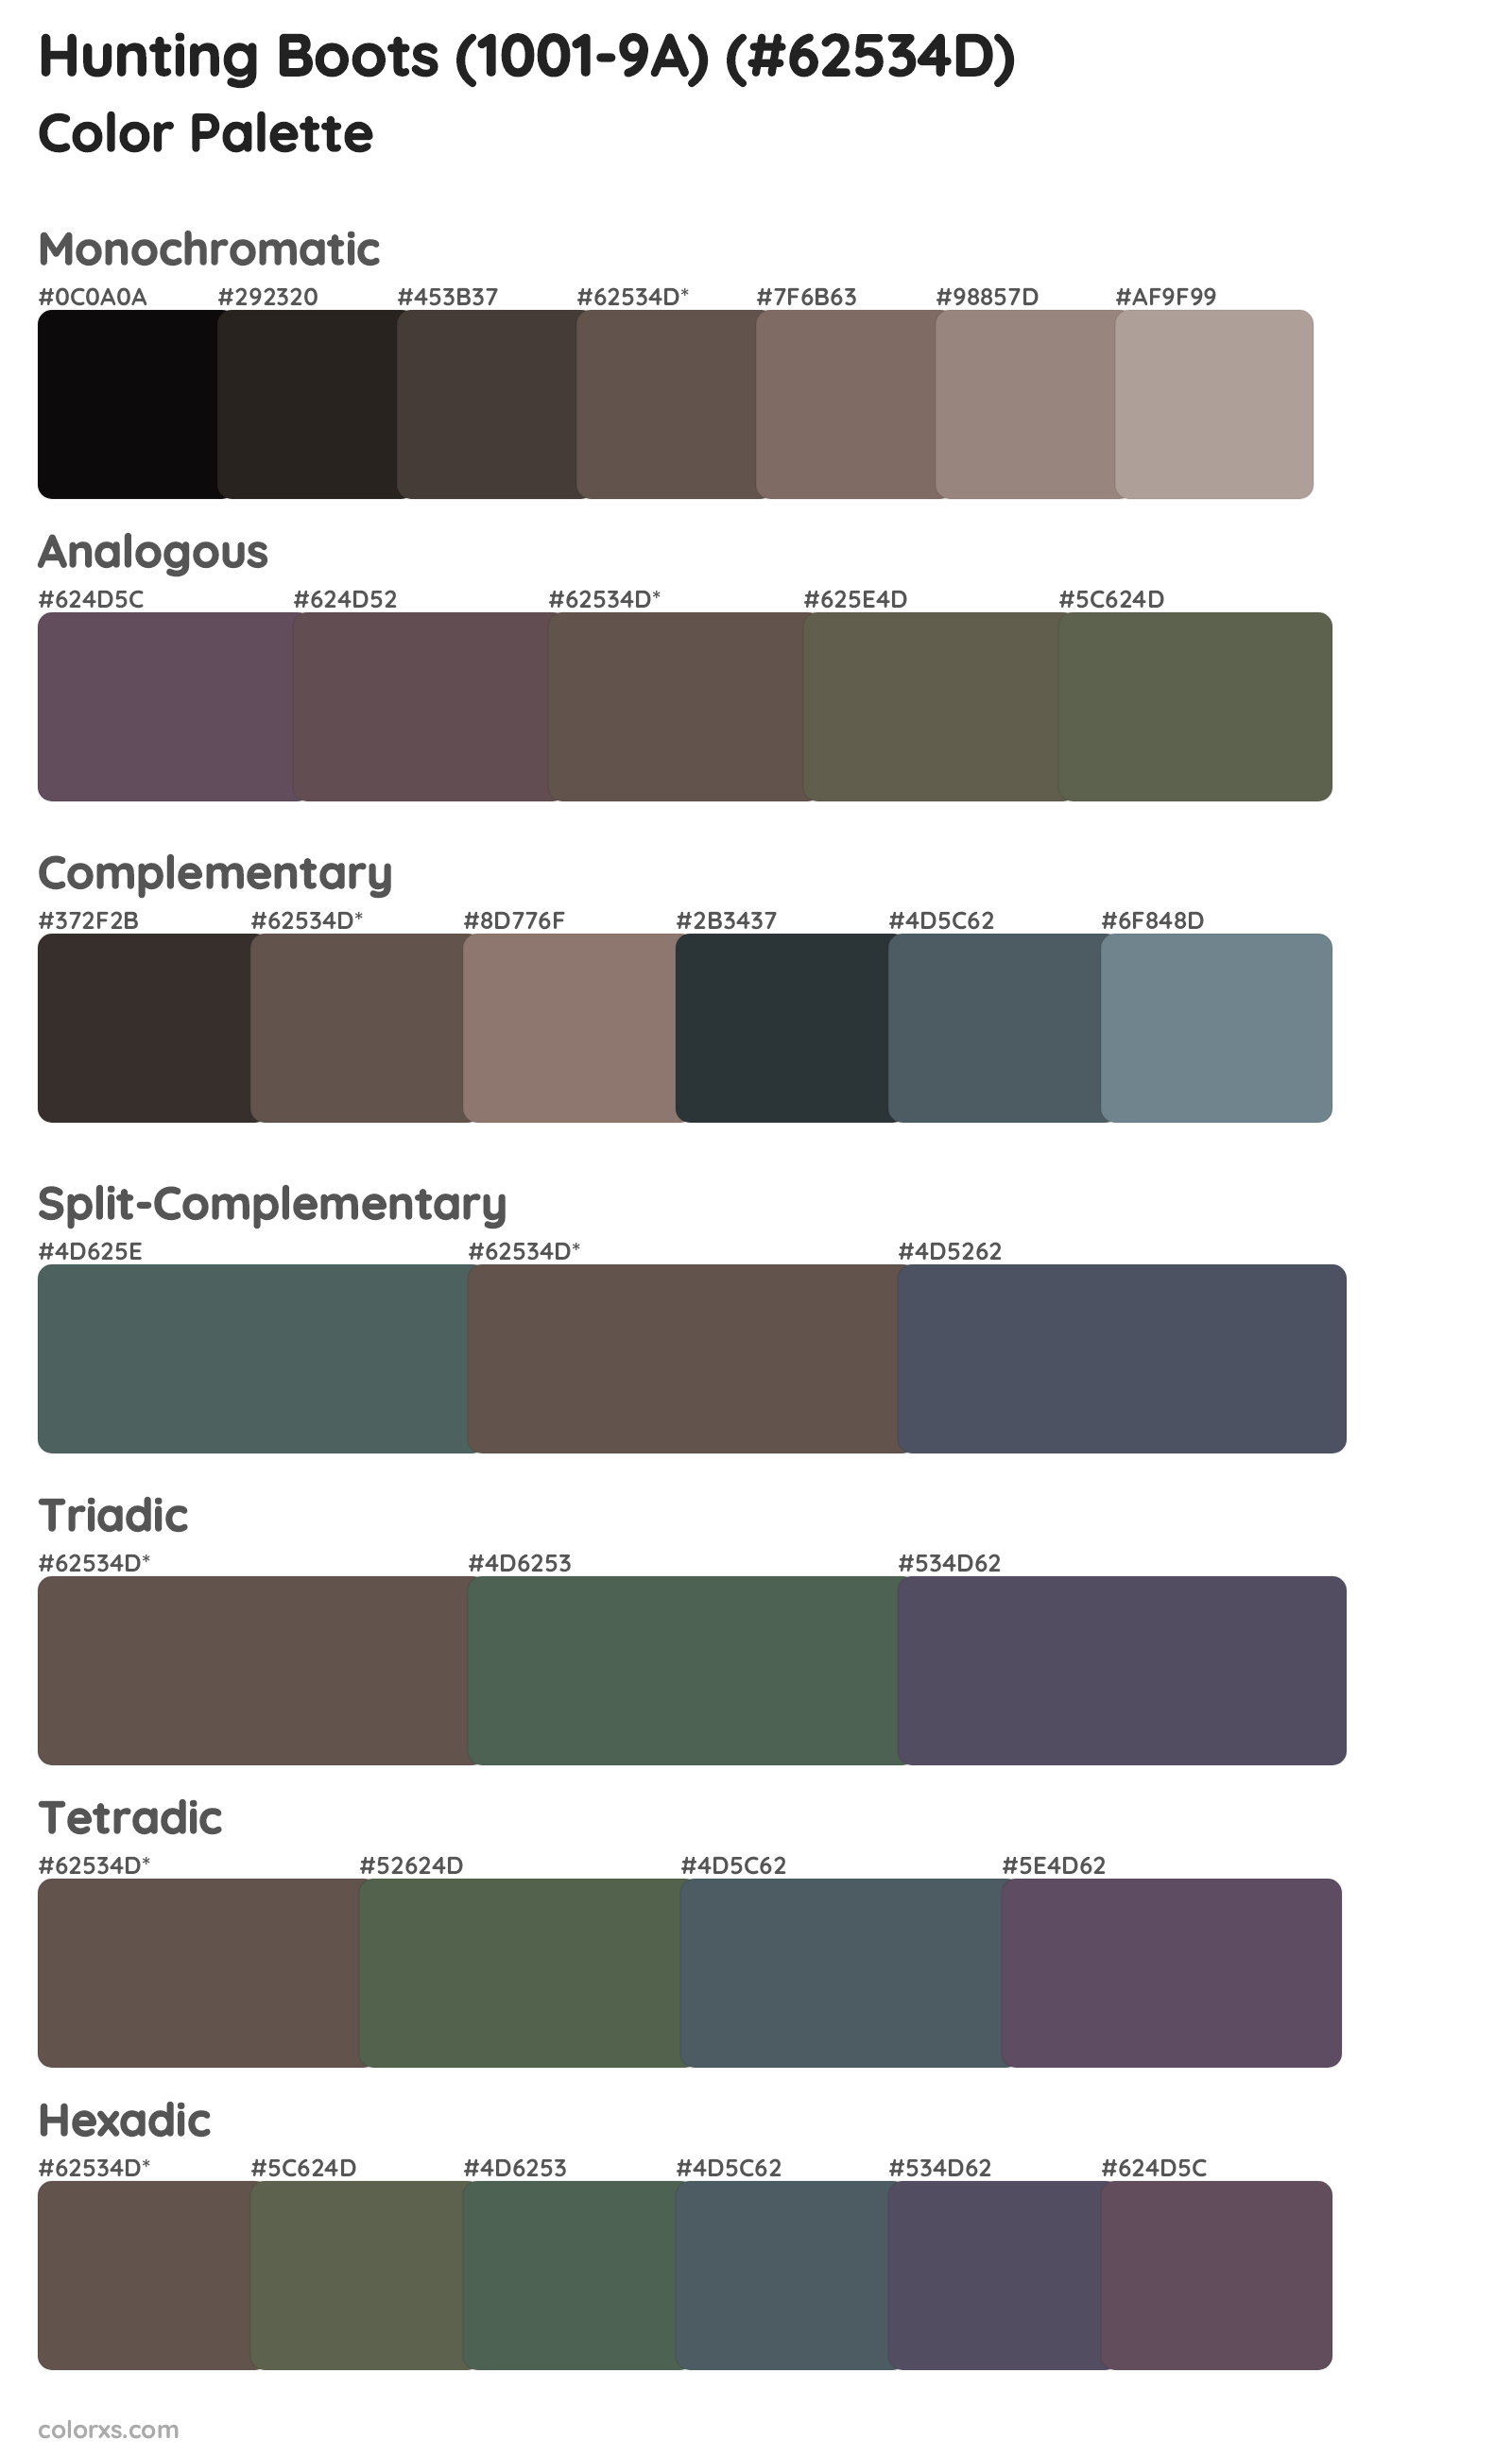 Hunting Boots (1001-9A) Color Scheme Palettes